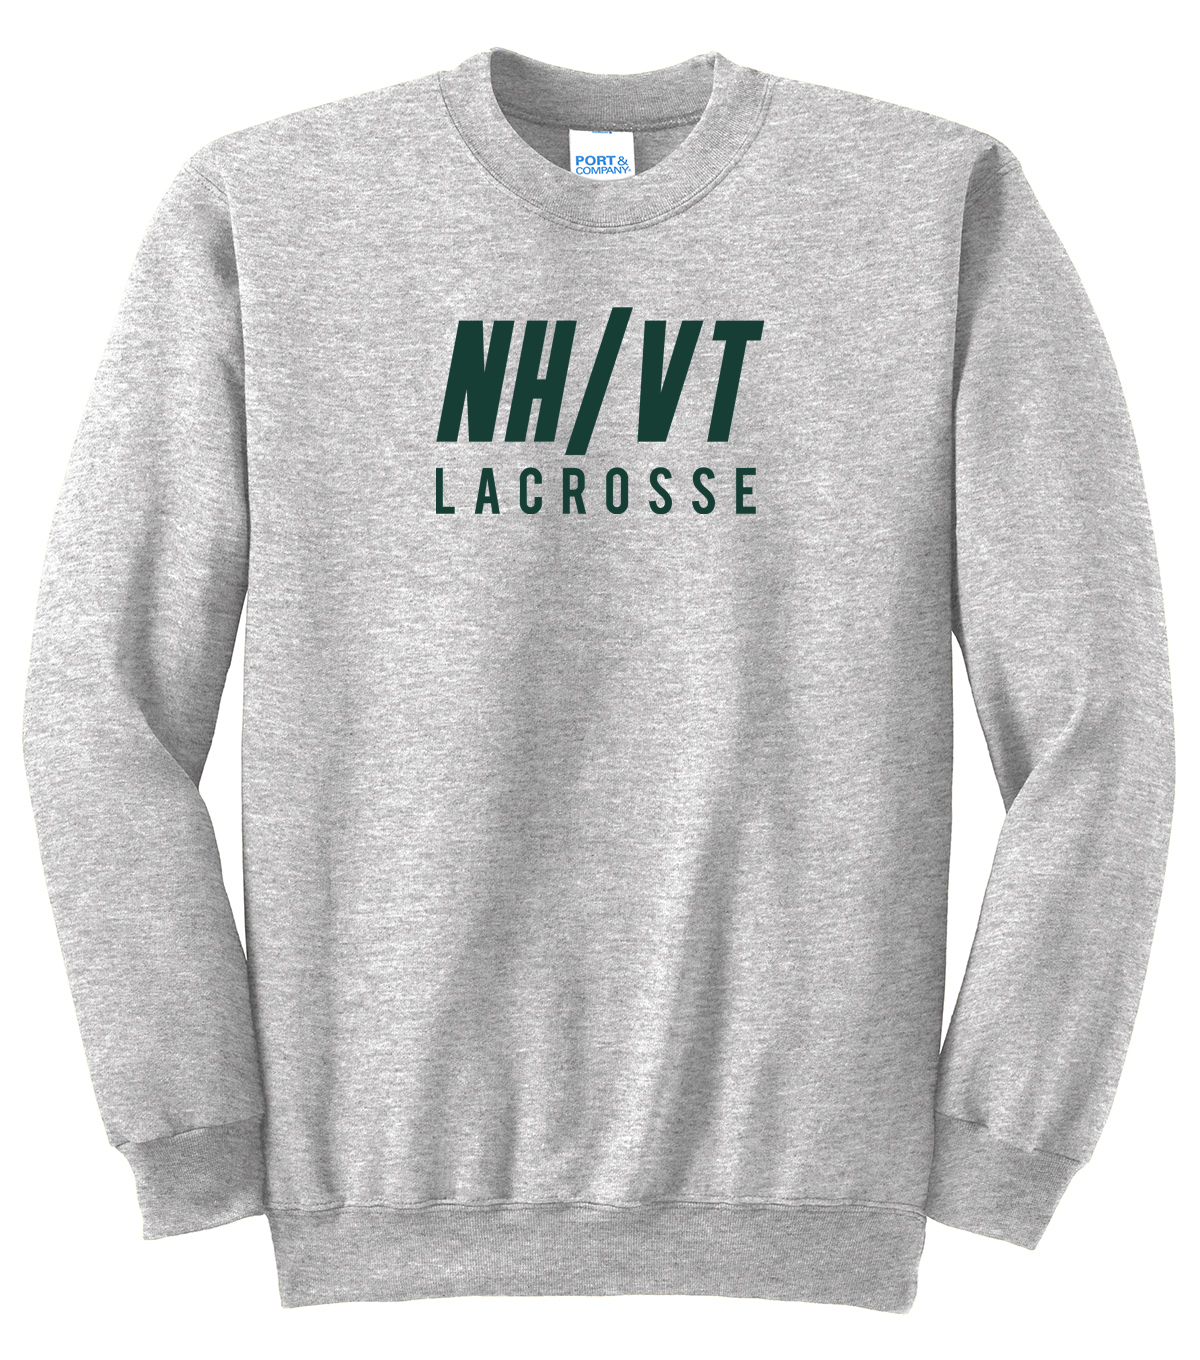 NH/VT Lacrosse Crew Neck Sweater